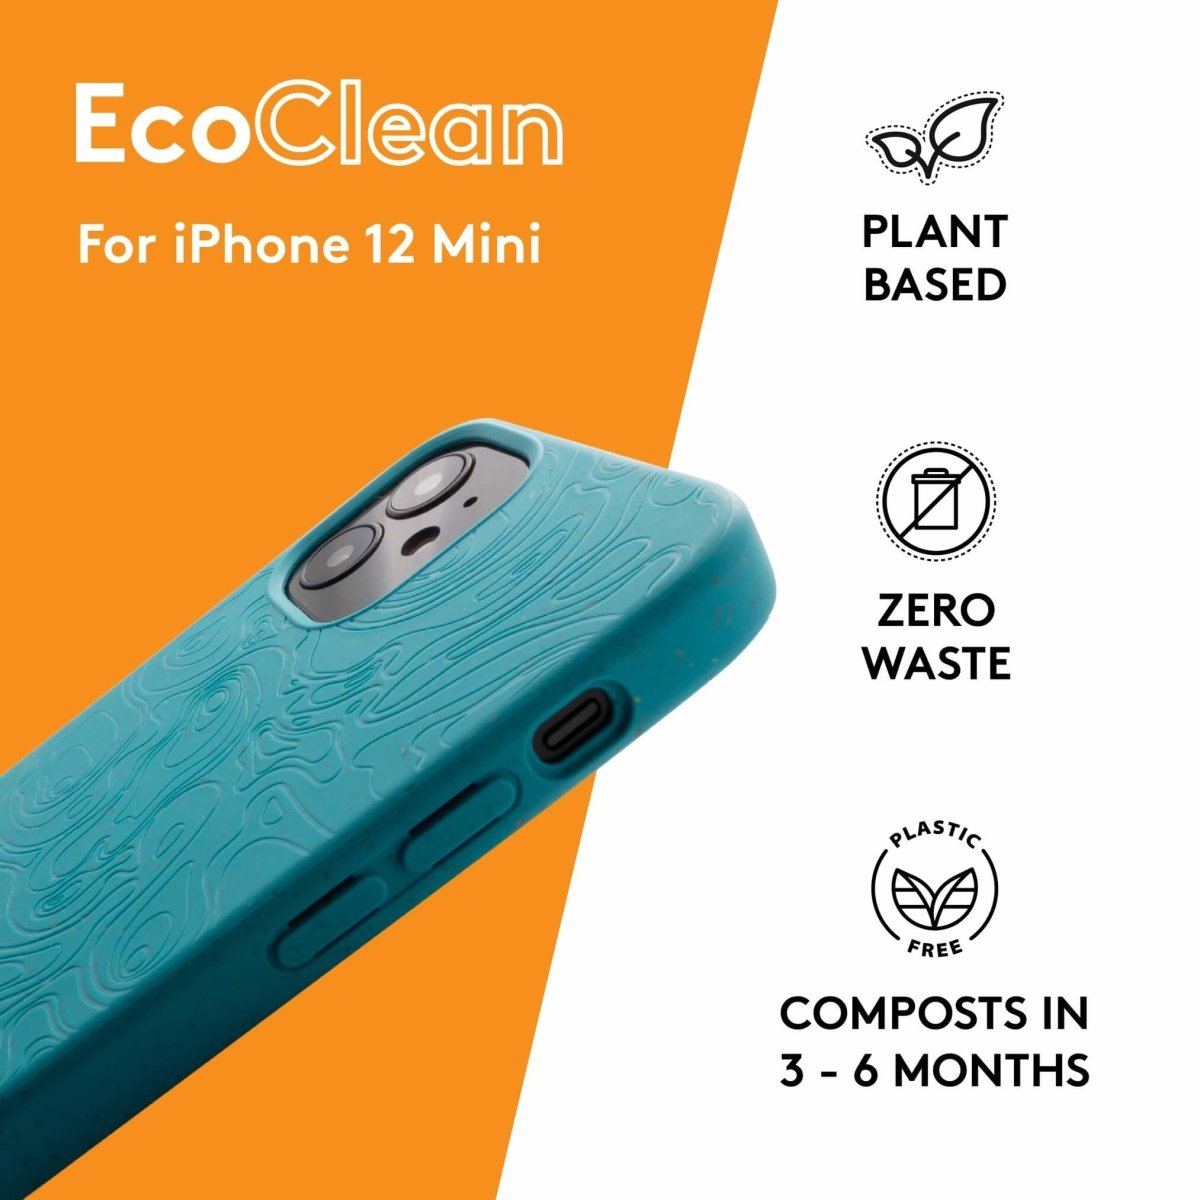 Funda EcoFriendly Ecológica iPhone 12 Mini A2176, A2399 - Klicfon